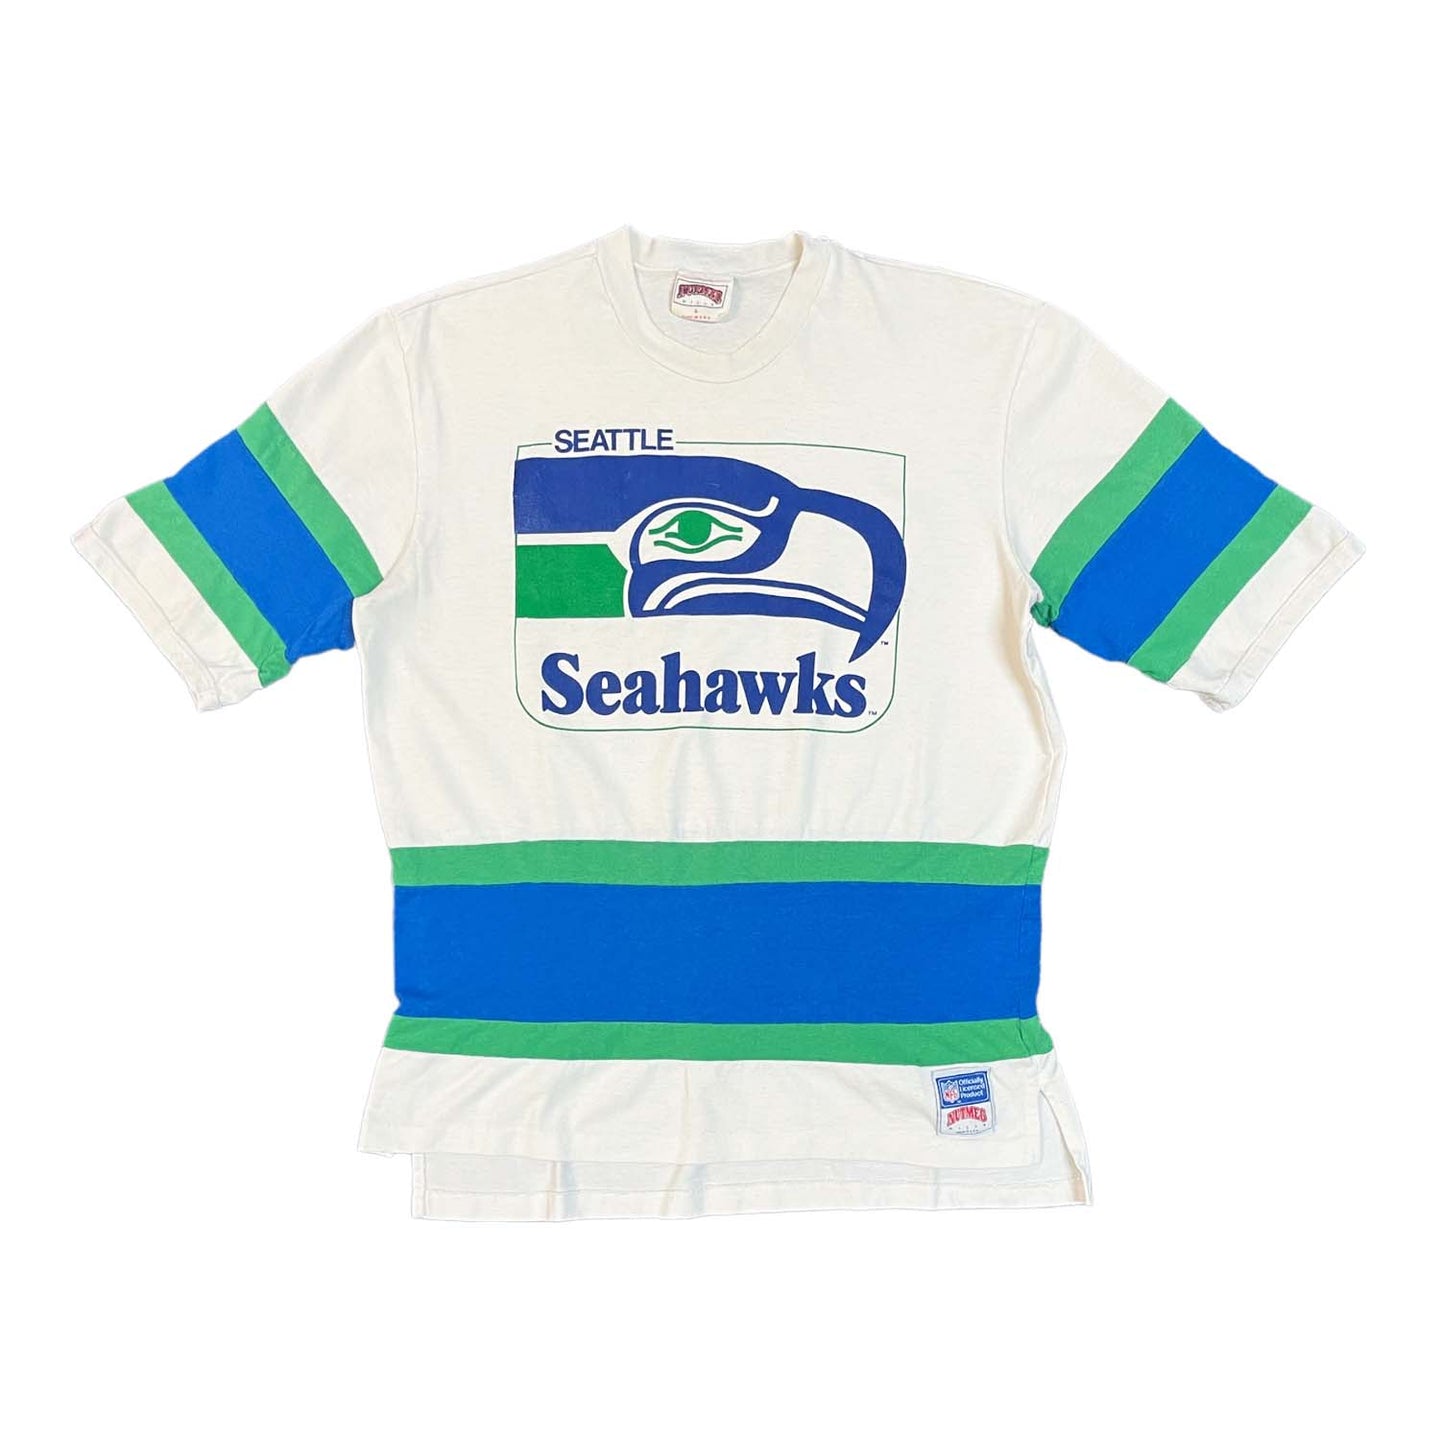 Vintage Seattle Seahawks Nutmeg jersey